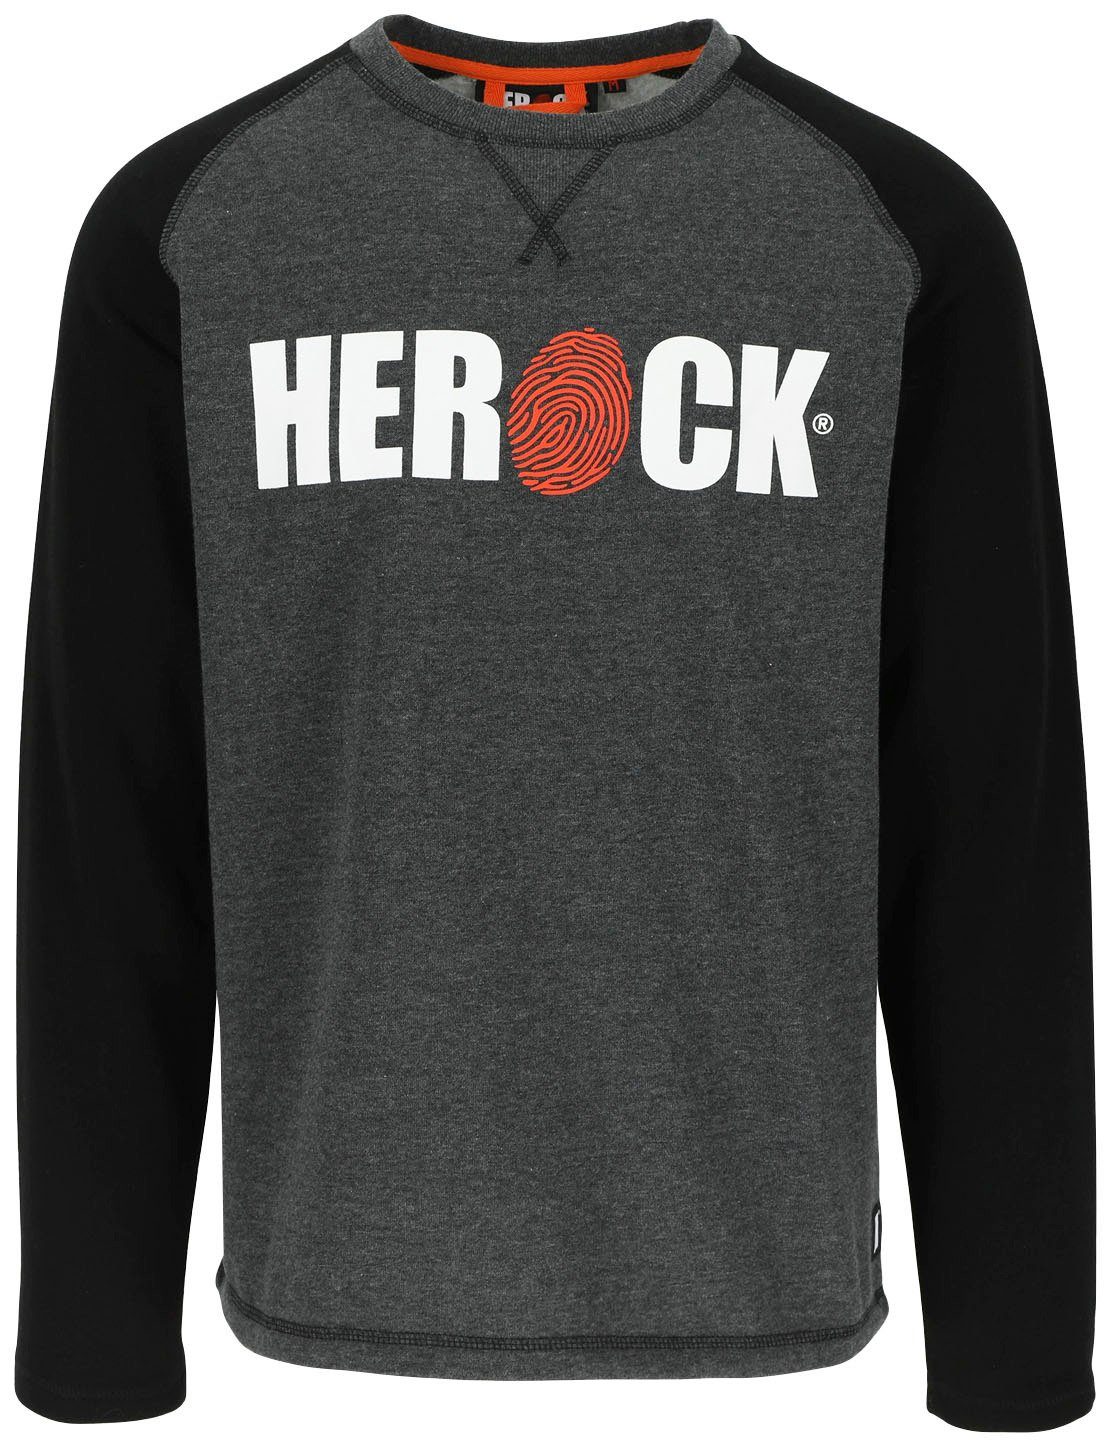 Herock Langarmshirt Schwarz/Grau 2-Farbig Herock®- Rundhals, Sweater mit T-Shirt/Sweater, Aufdruck, ROLES